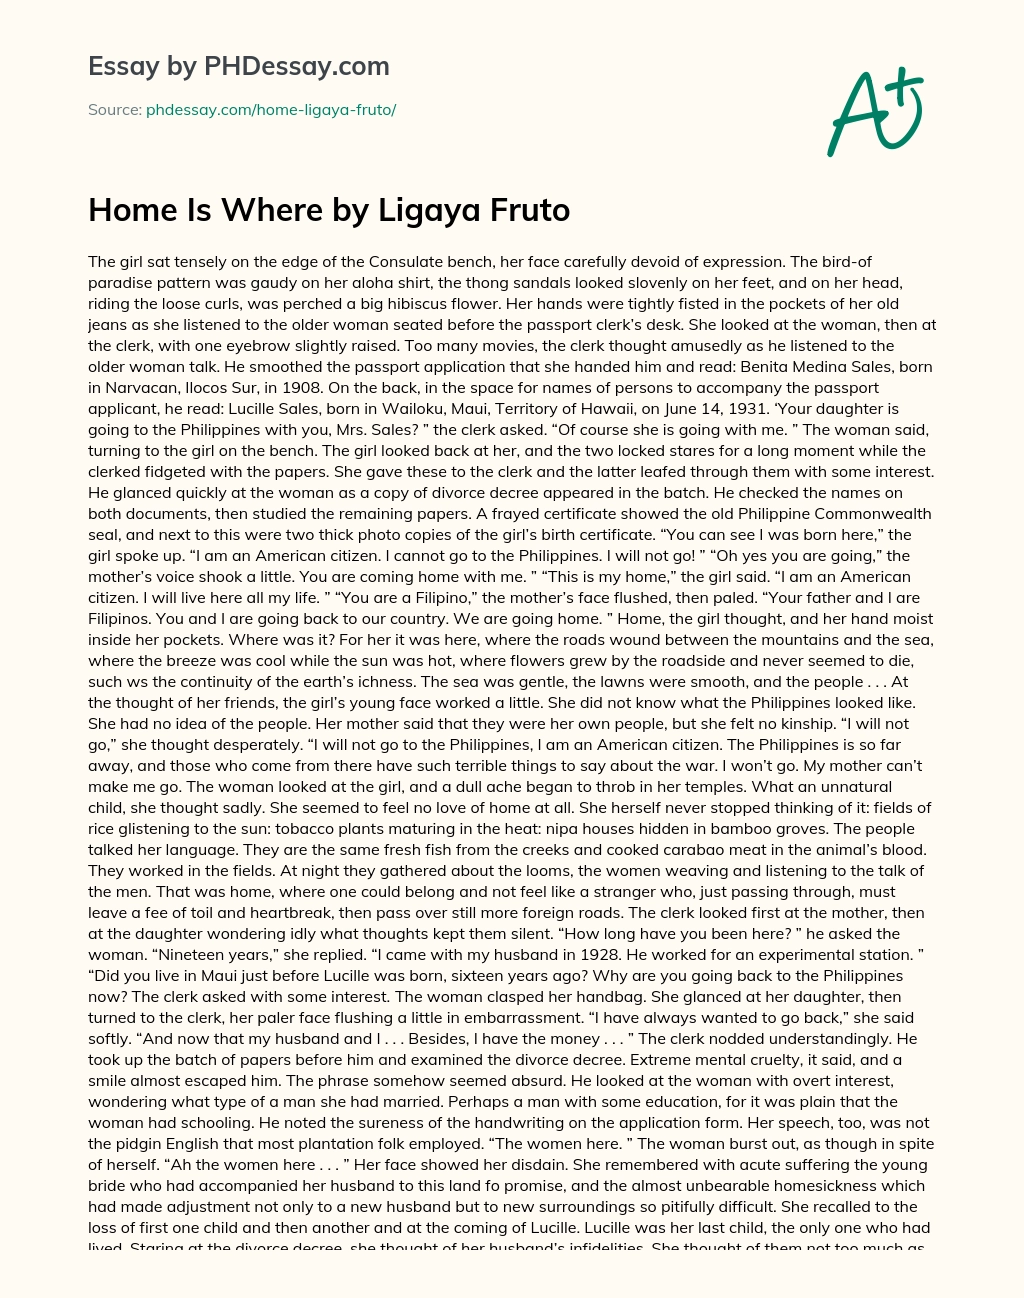 Home Is Where by Ligaya Fruto essay